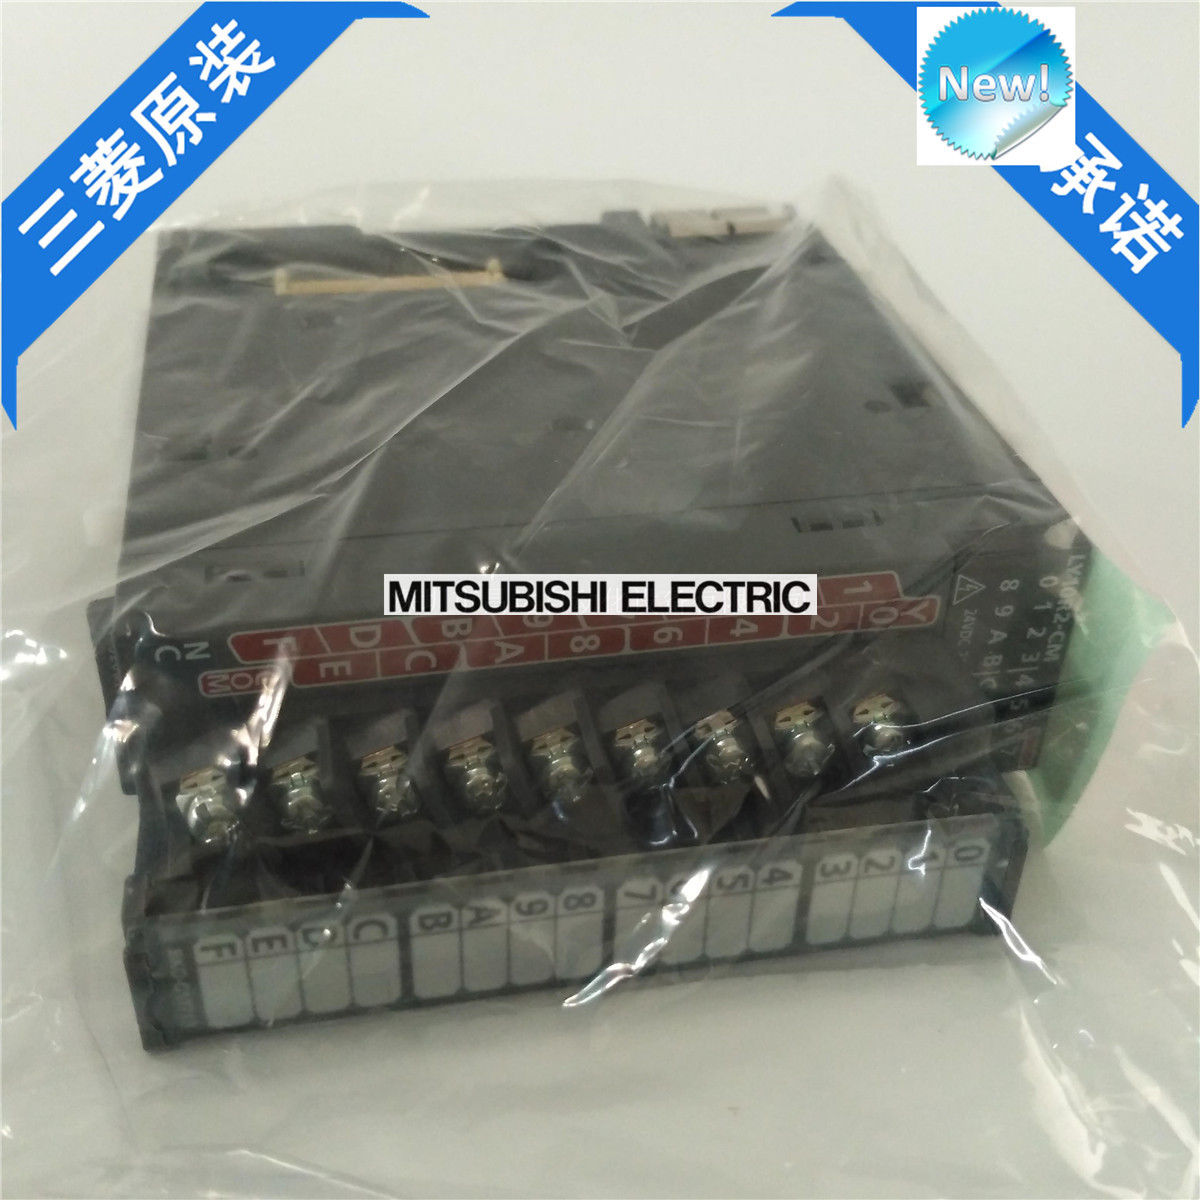 Brand New Mitsubishi PLC LY10R2-CM In Box LY10R2CM - Click Image to Close